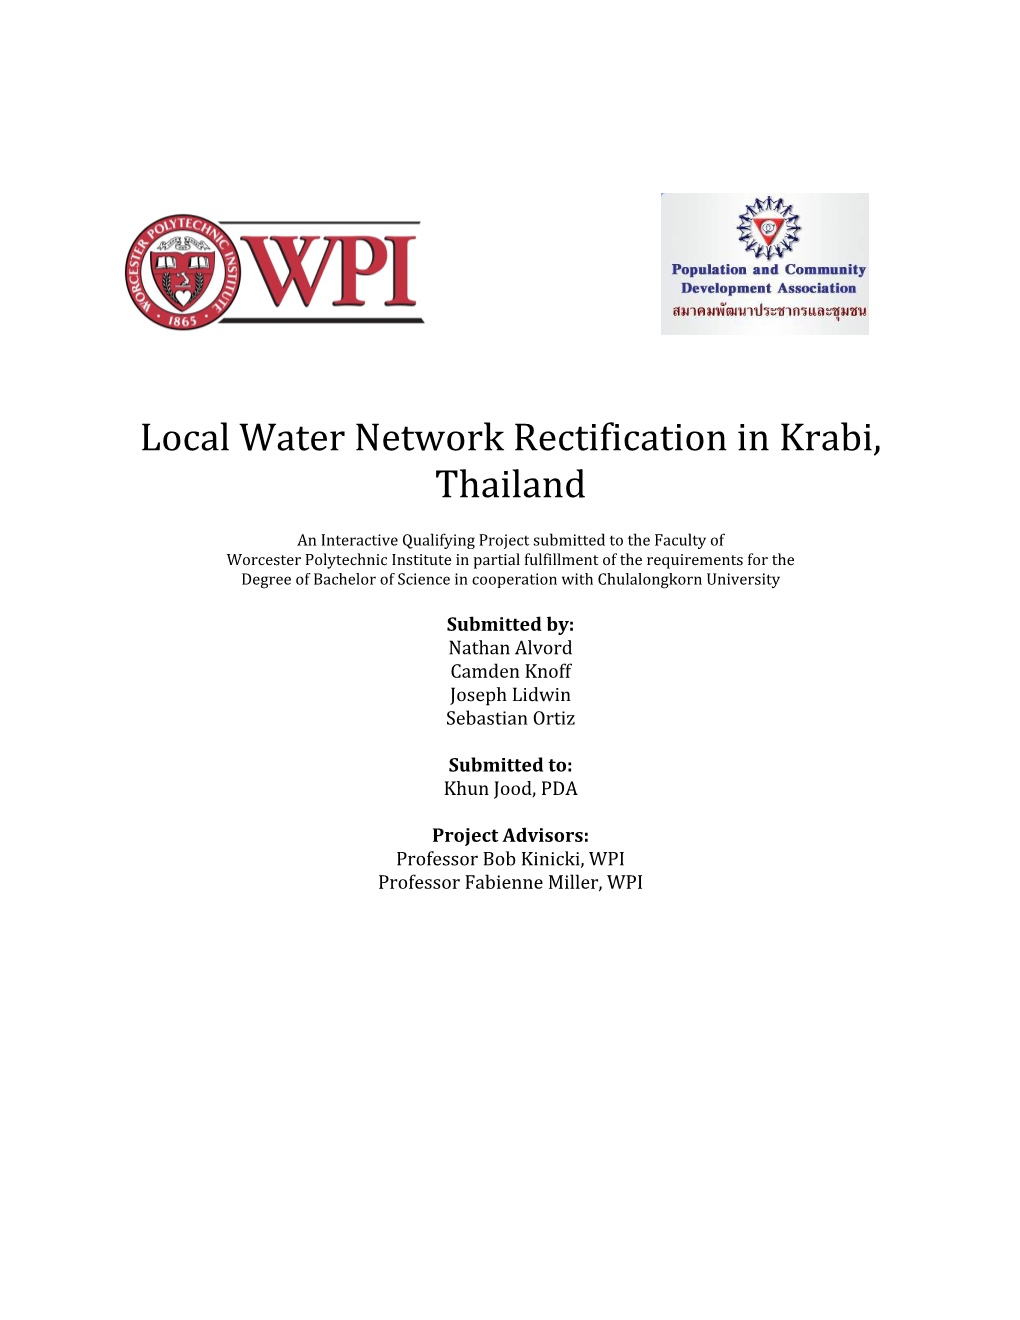 Local Water Network Rectification in Krabi, Thailand